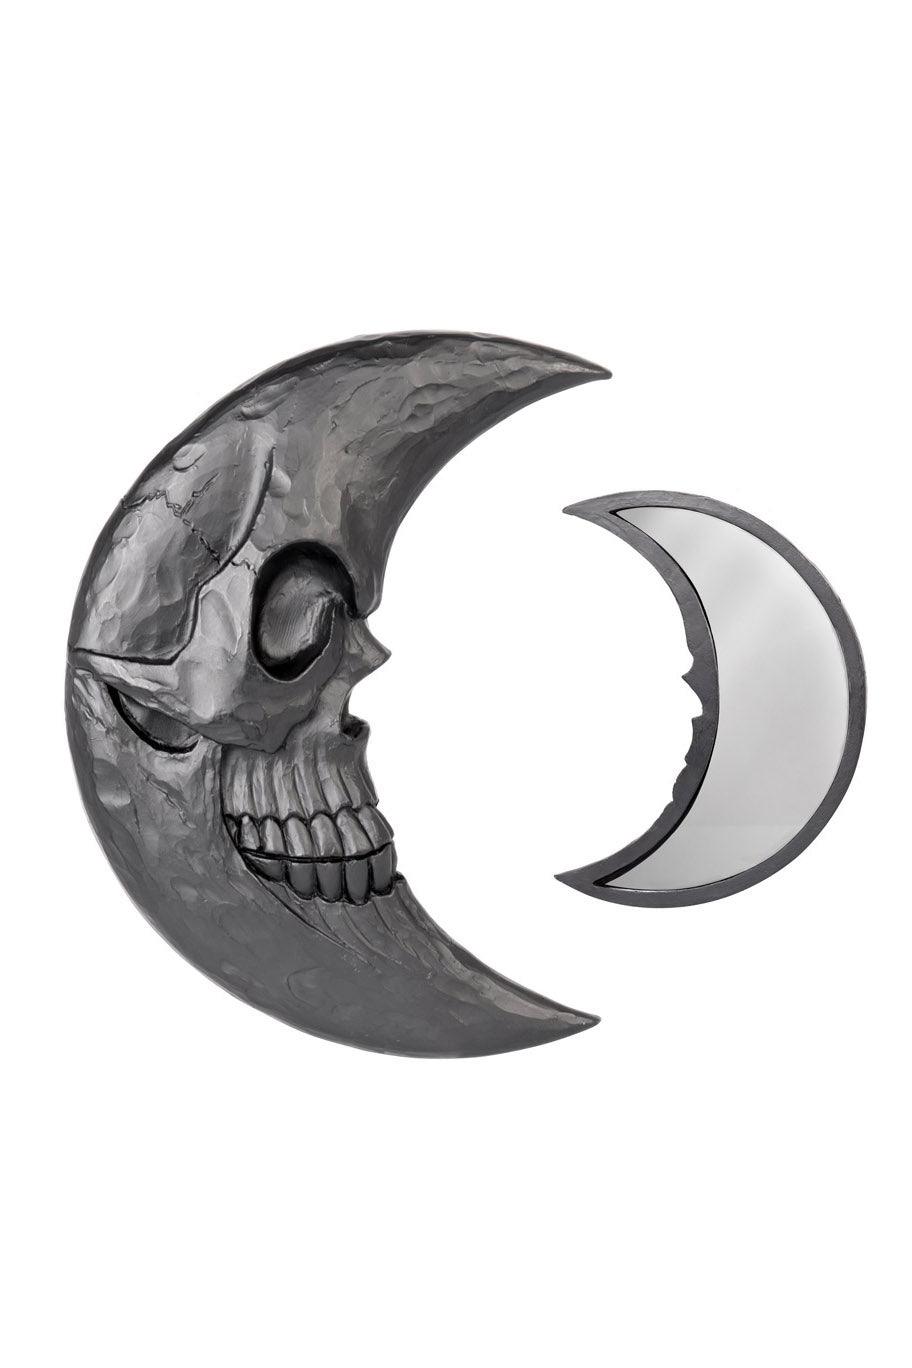 Alchemy Black Moon Hand Mirror - VampireFreaks